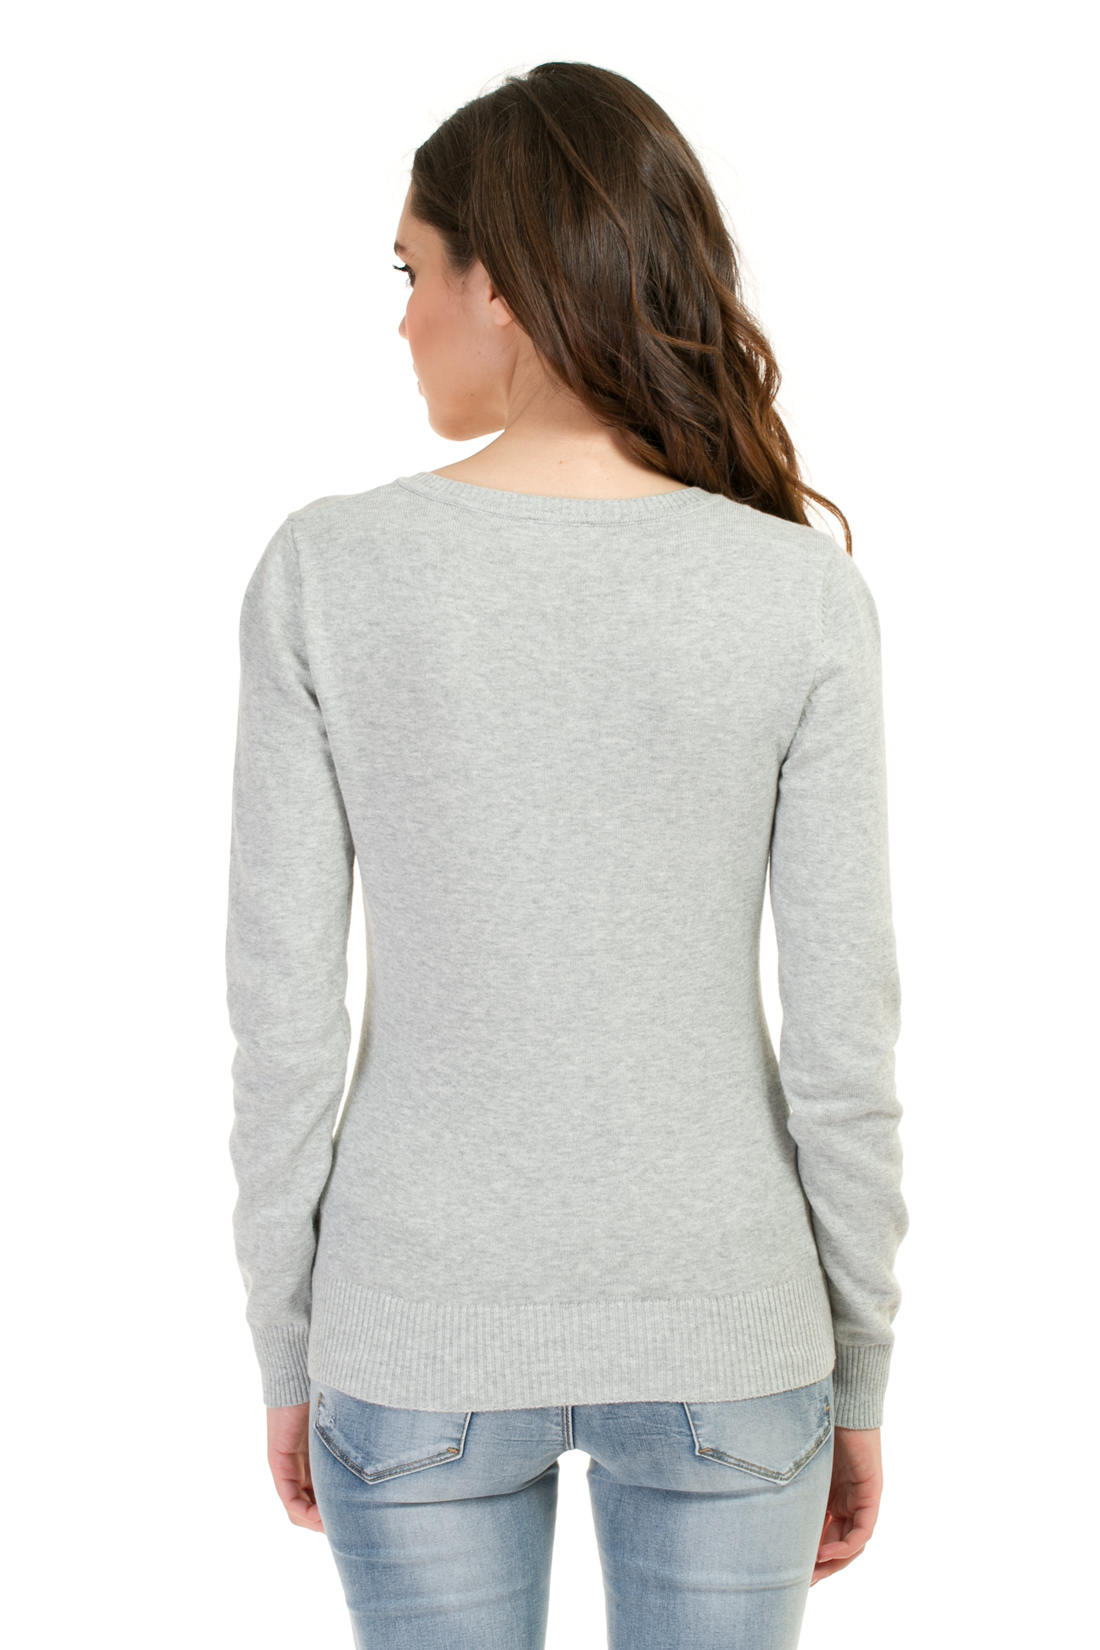 Базовый пуловер из хлопка (арт. baon B137201), размер XXL, цвет silver melange#серый Базовый пуловер из хлопка (арт. baon B137201) - фото 2